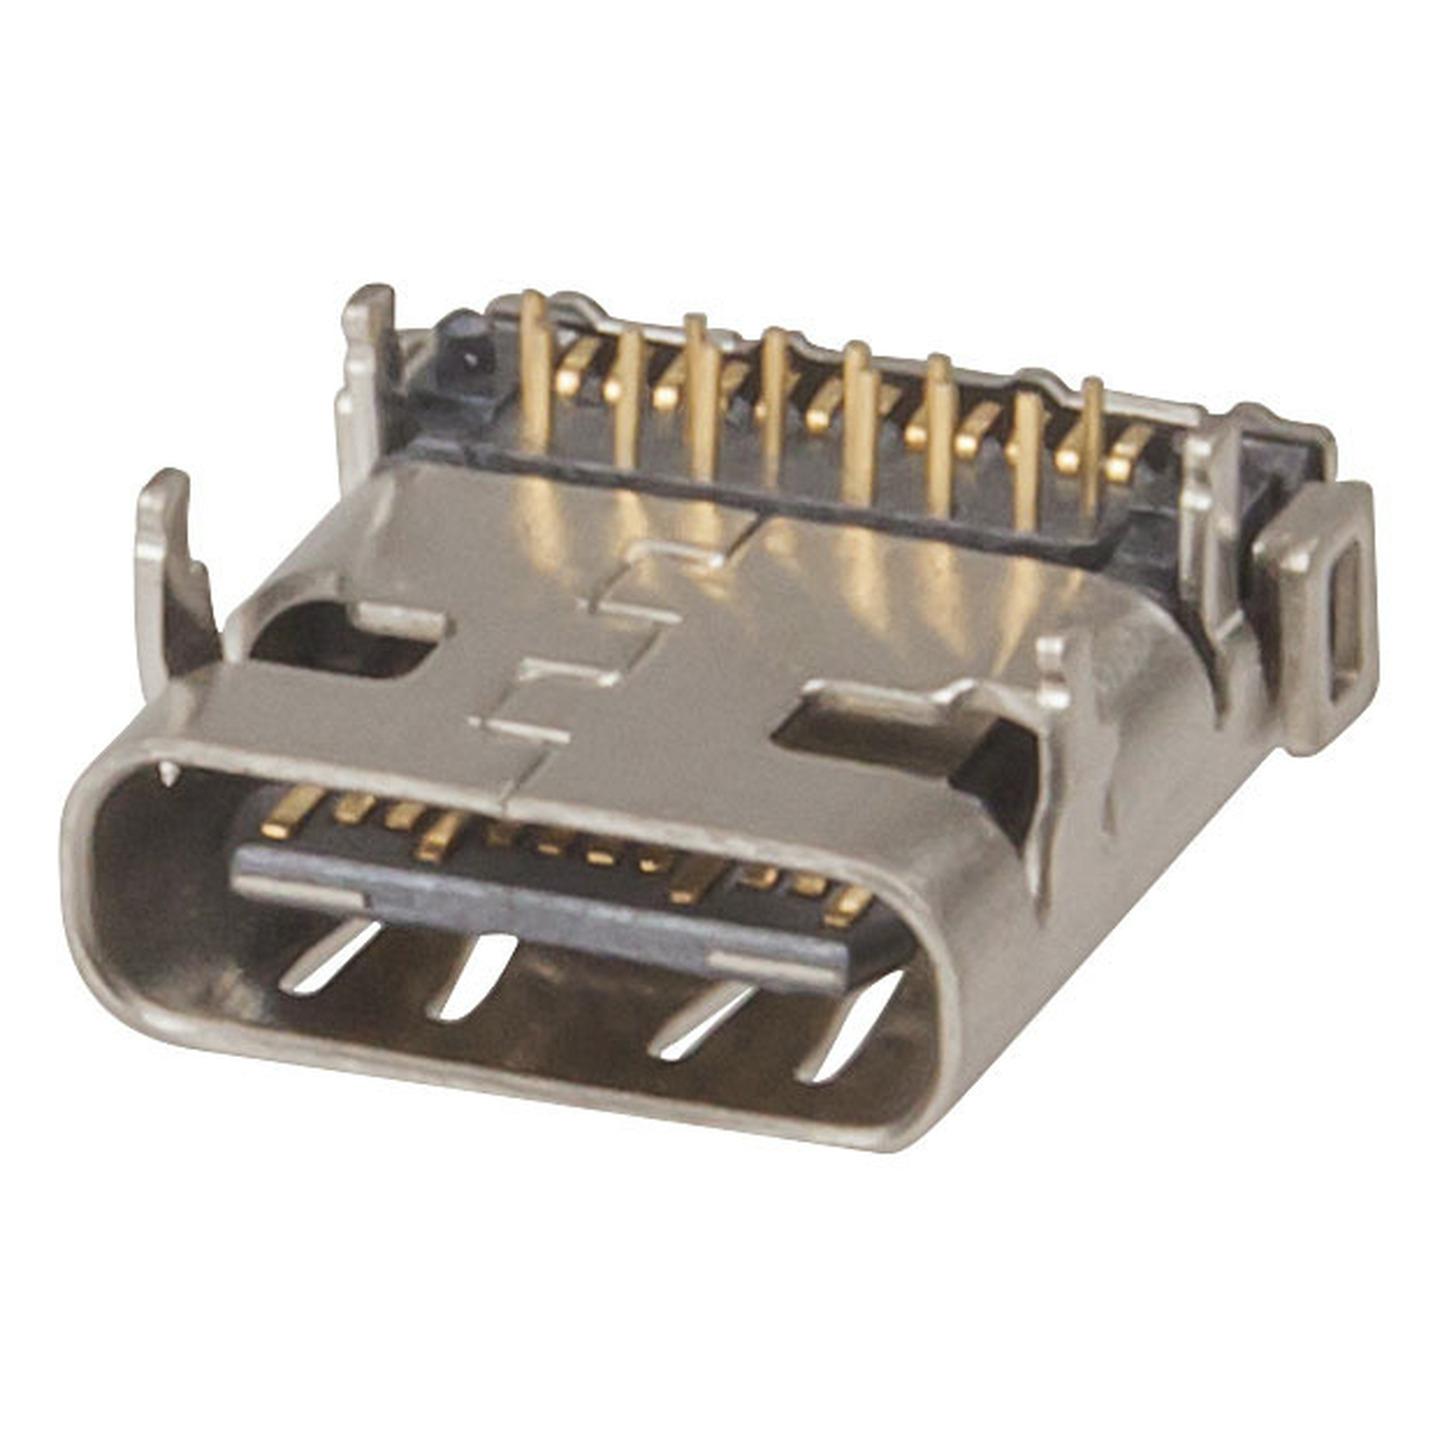 PCB Mount USB 3.1 Type C Socket